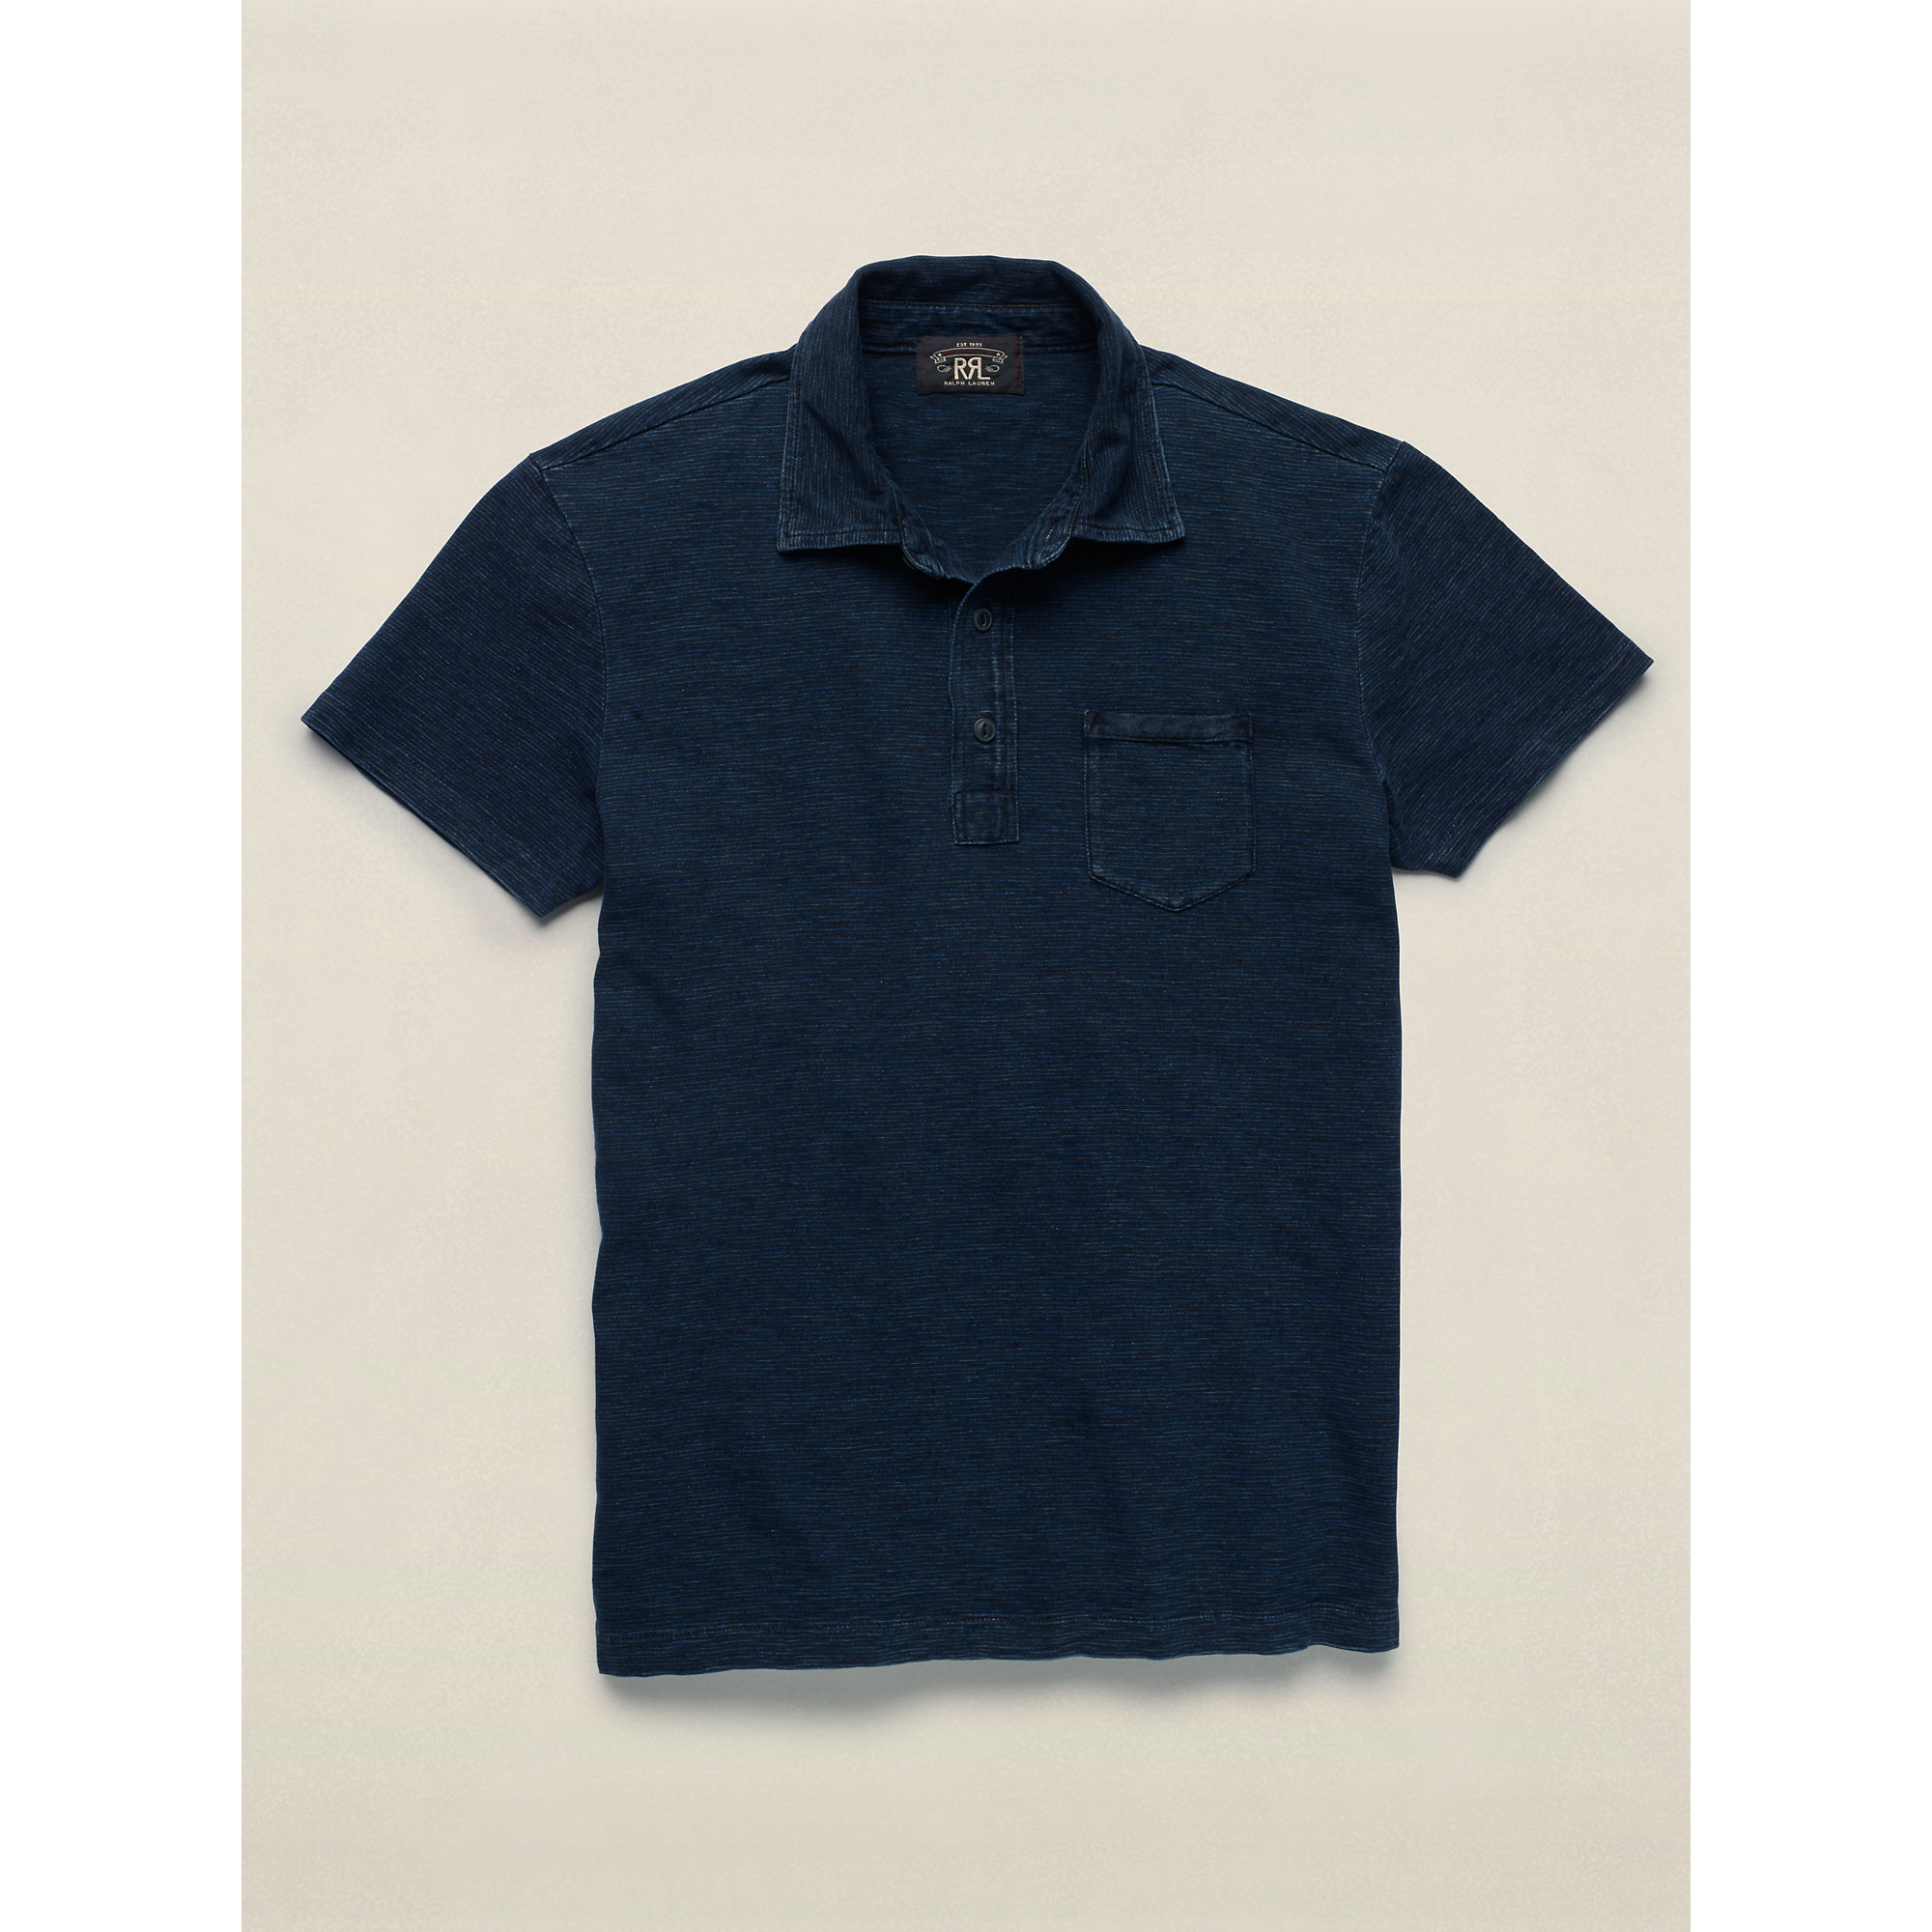 Lyst - Rrl Indigo Cotton Polo Shirt in Blue for Men